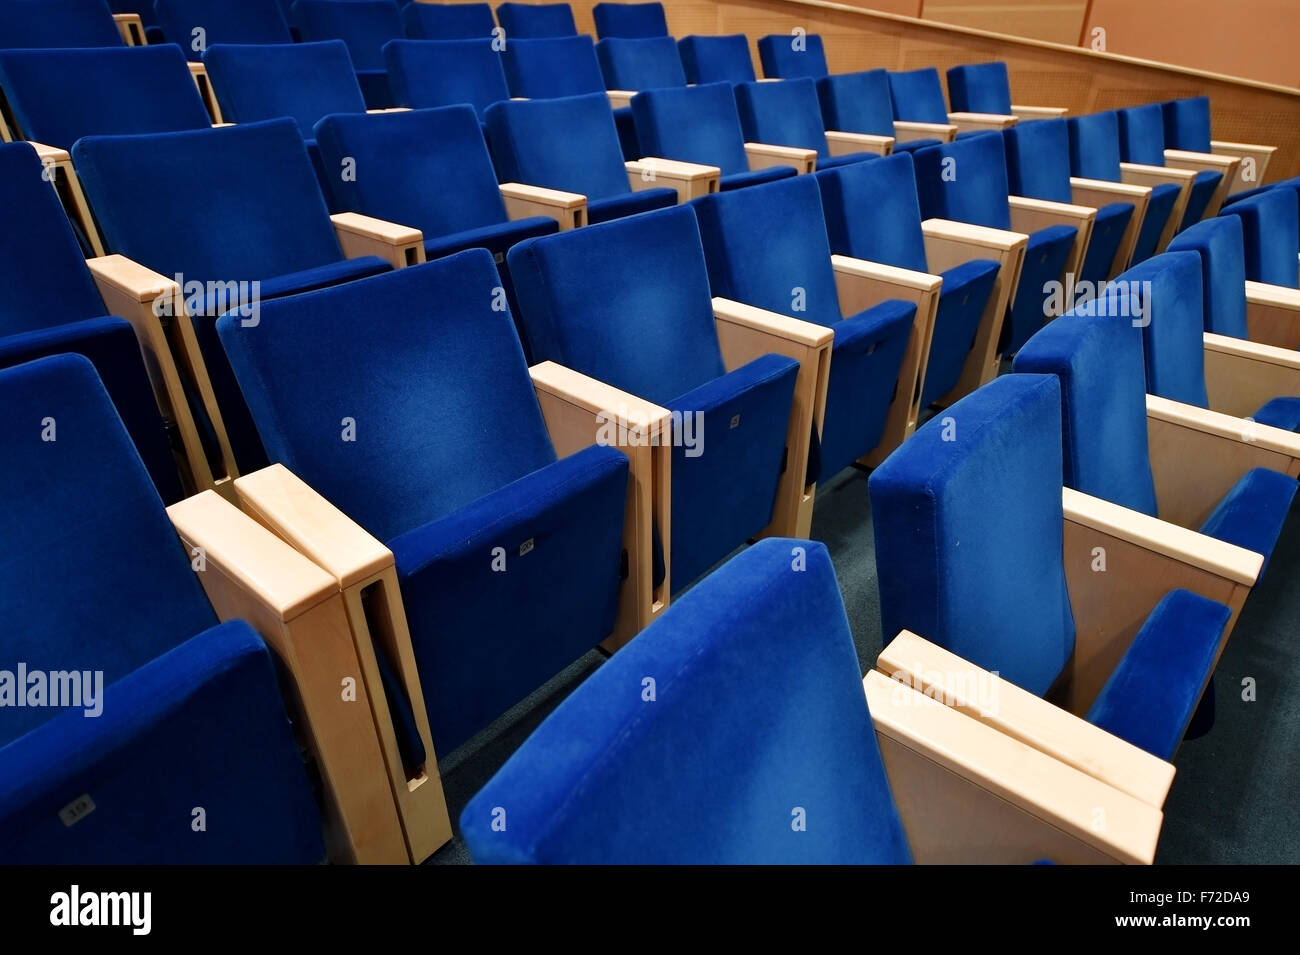 Empty blue velvet chairs inside an amphitheater Stock Photo